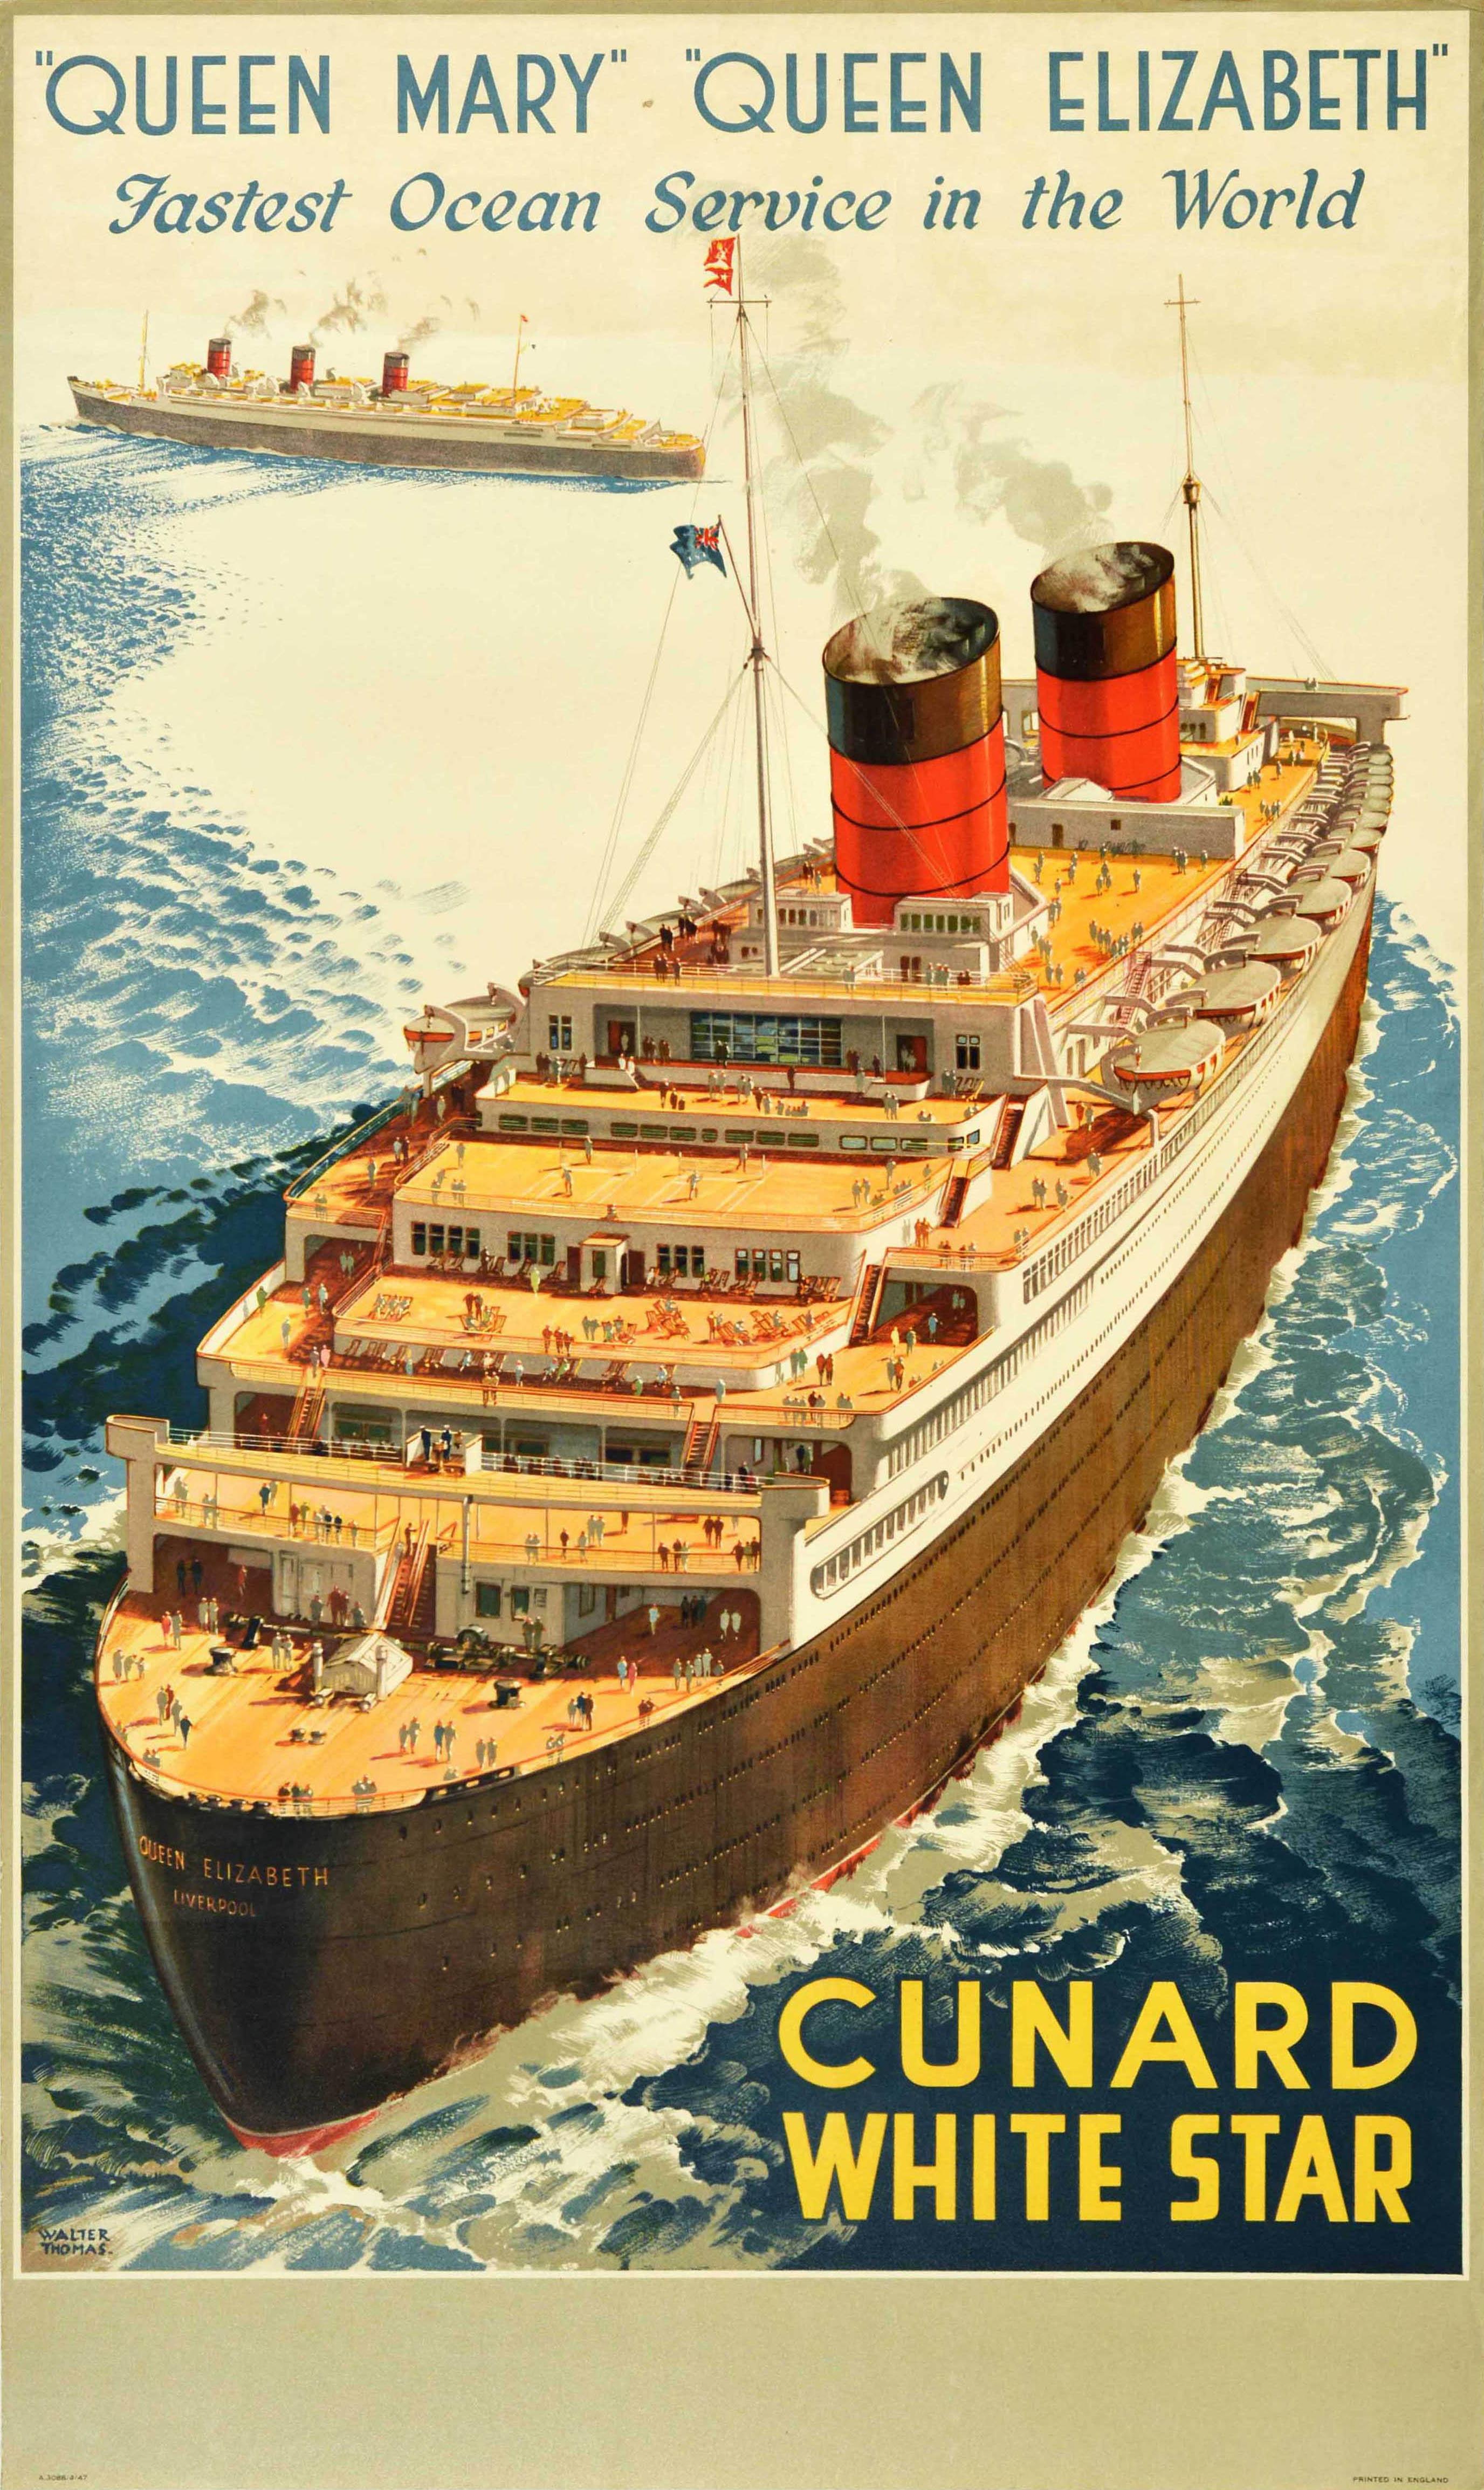 Walter Thomas Print - Original Vintage Poster Queen Mary Queen Elizabeth Cunard White Star Ocean Liner